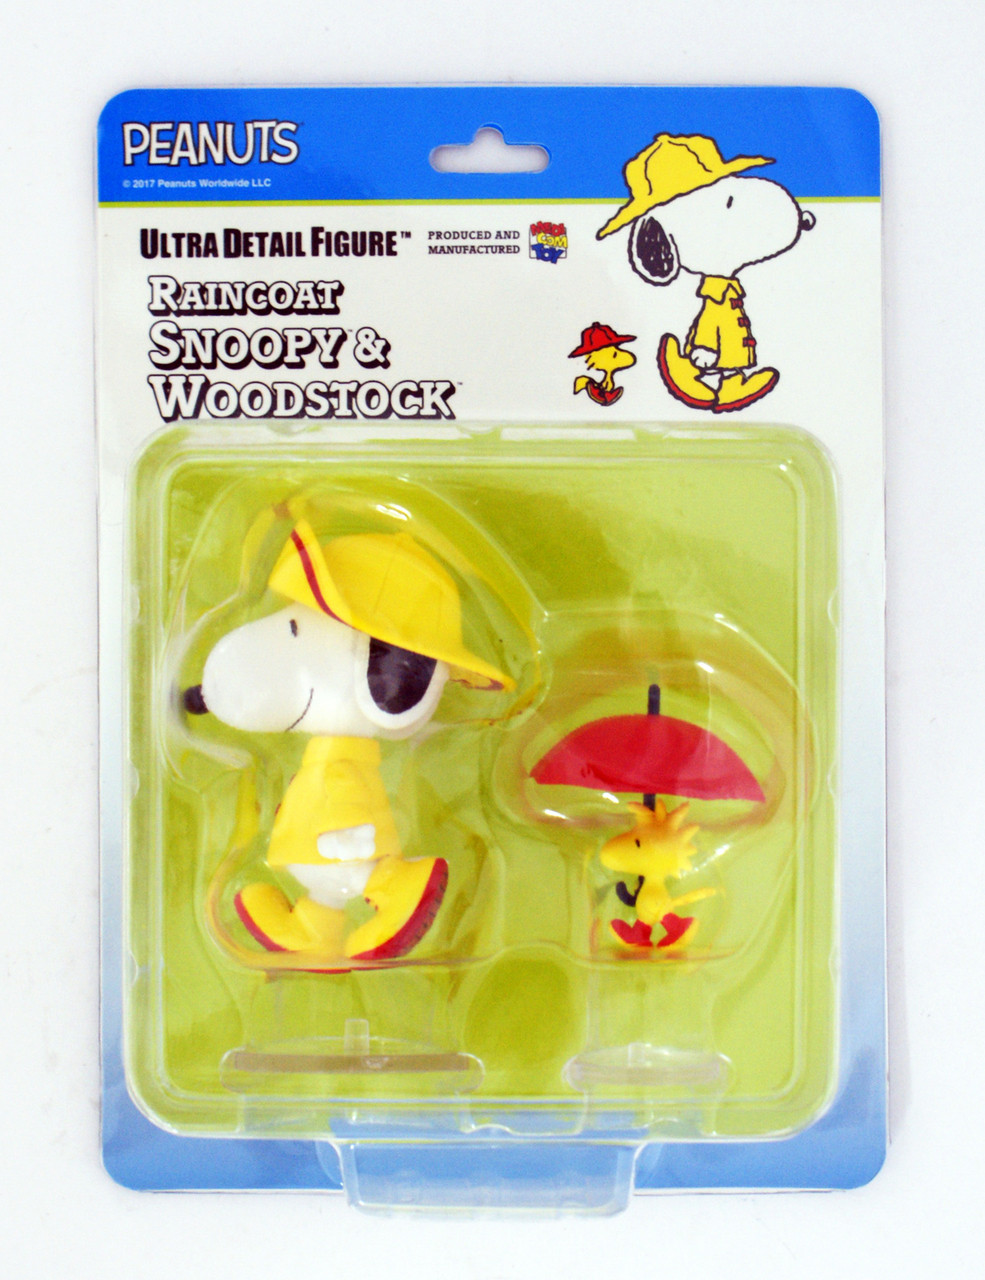 Medicom Ultra Detail Figure Peanuts Series 7 Raincoat Snoopy & Woodstock No.377 